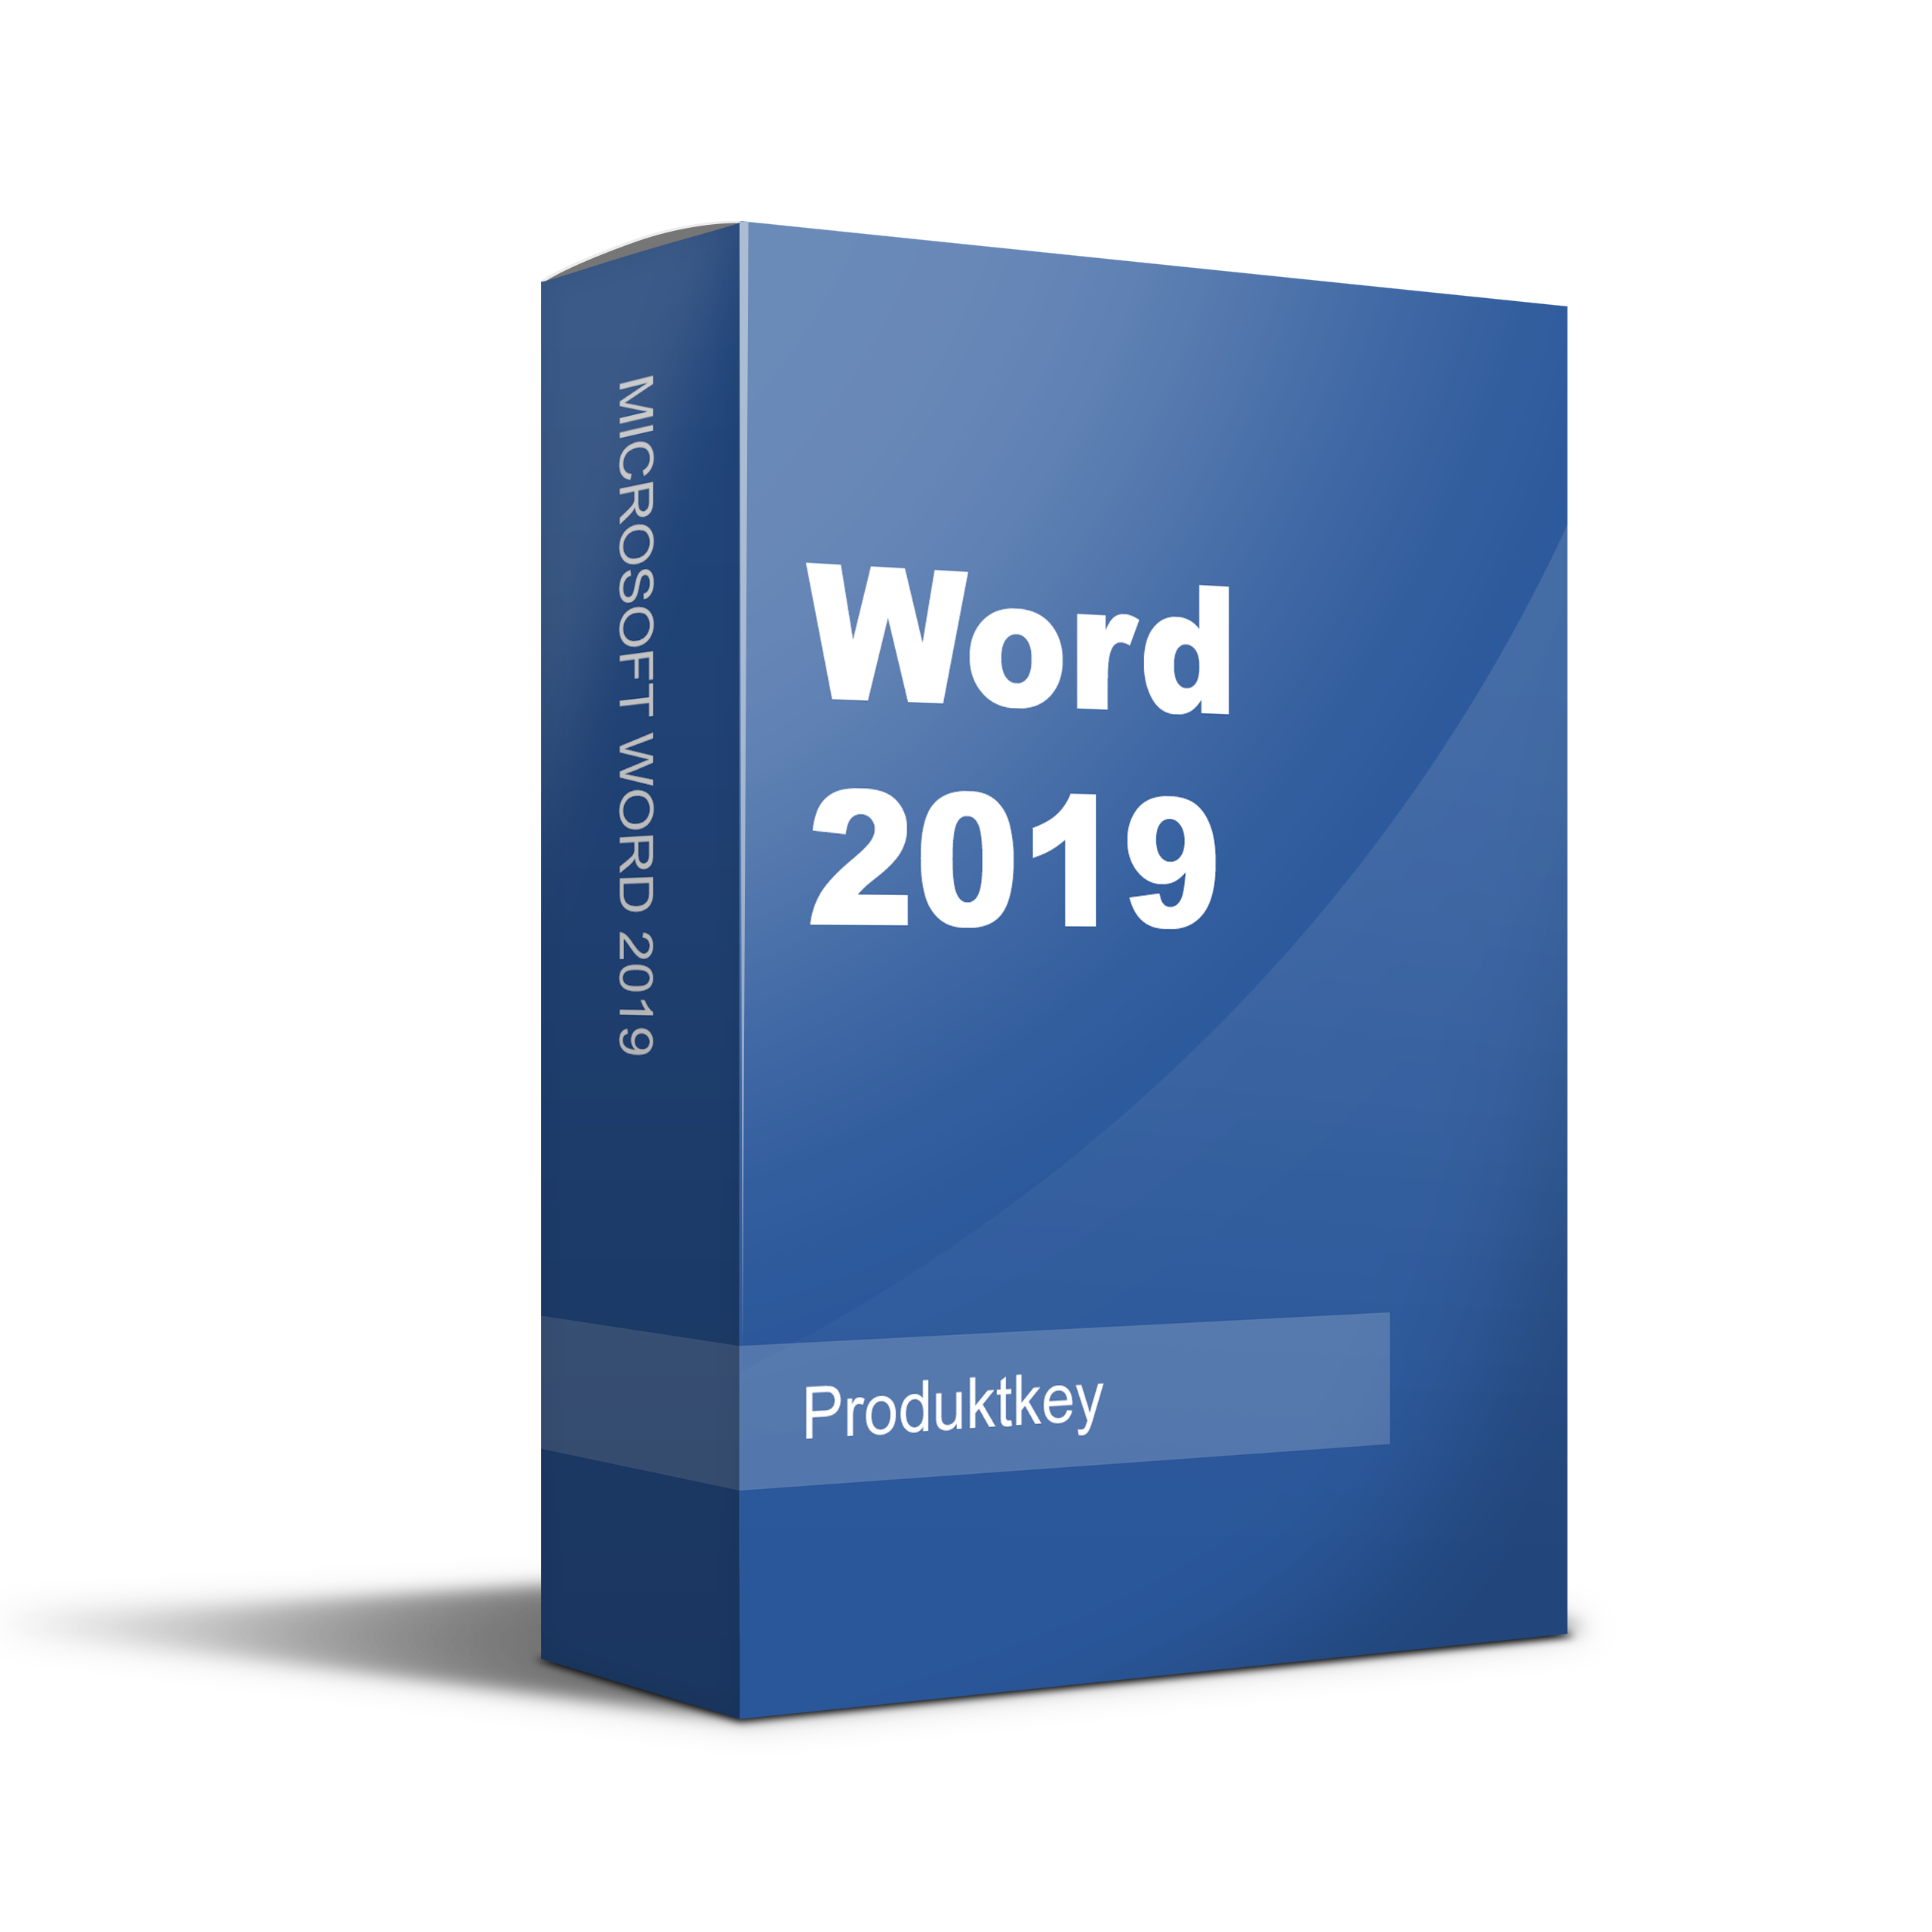 2019 microsoft word